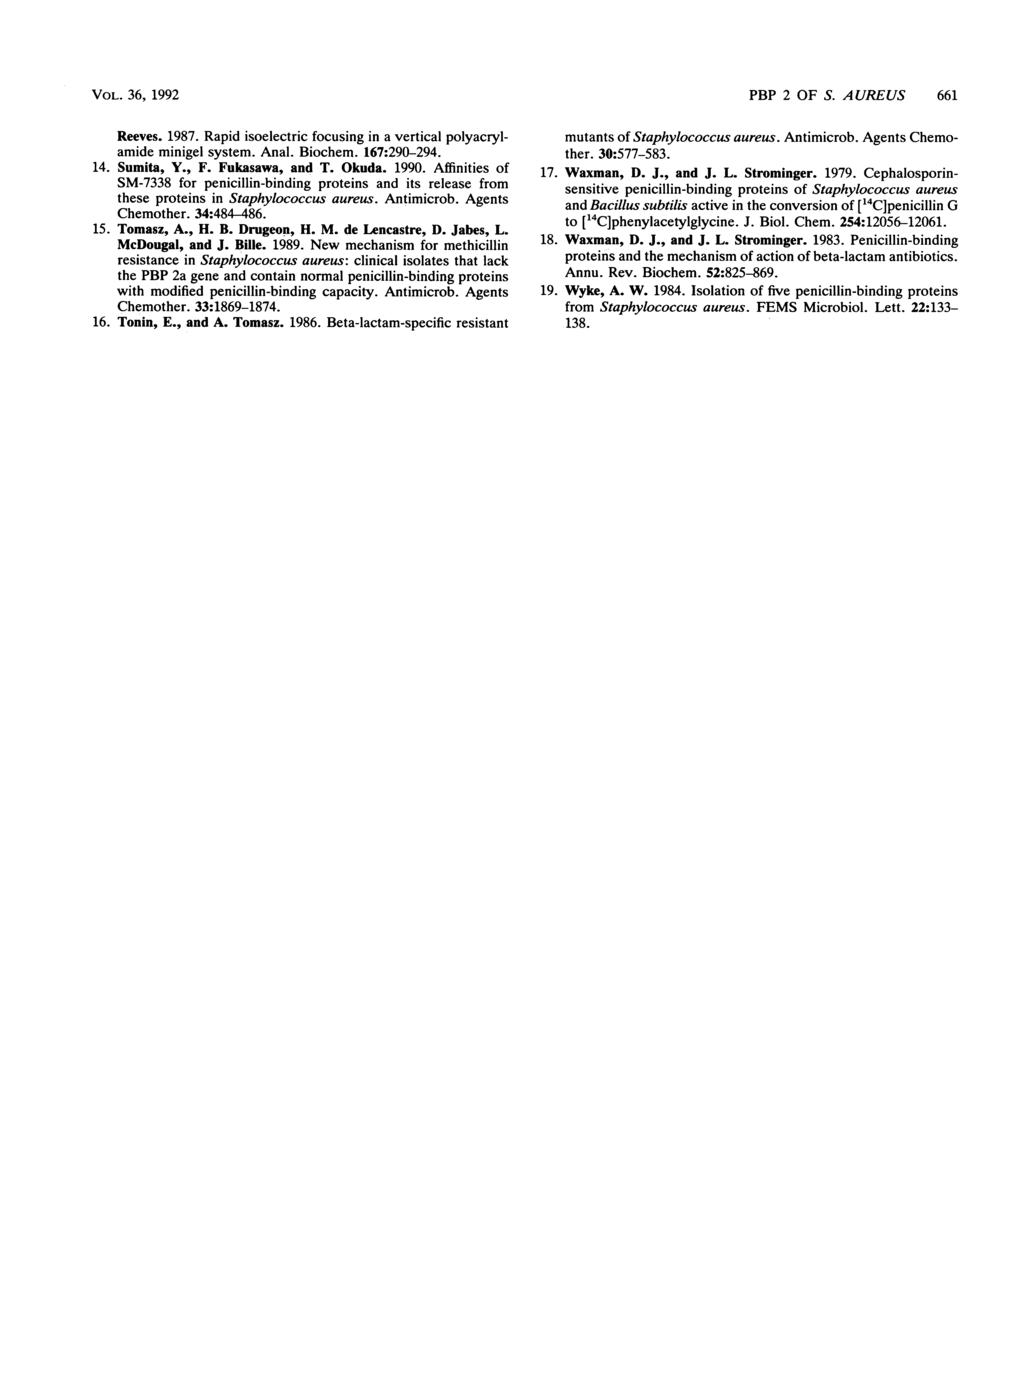 VOL. 36, 1992 Reeves. 1987. Rapid isoelectric focusing in a vertical polyacrylamide minigel system. Anal. Biochem. 167:290-294. 14. Sumita, Y., F. Fukasawa, and T. Okuda. 1990.